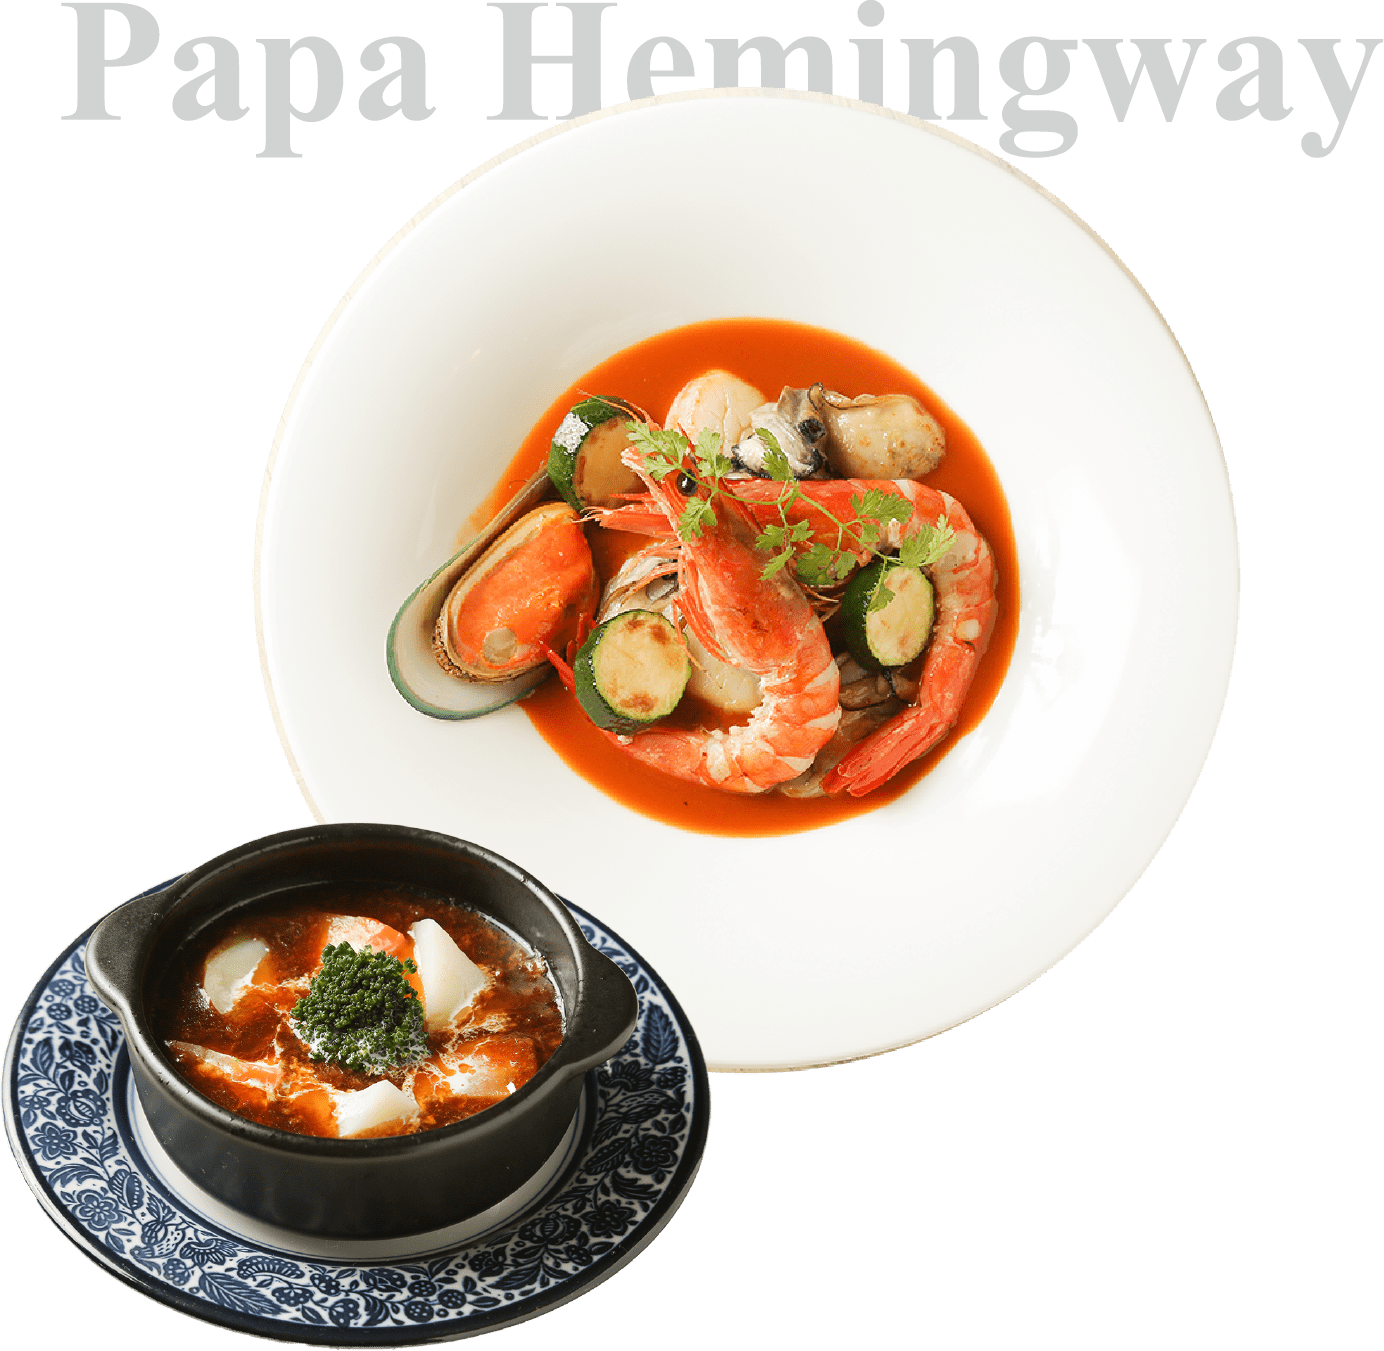  Papa Hemingway